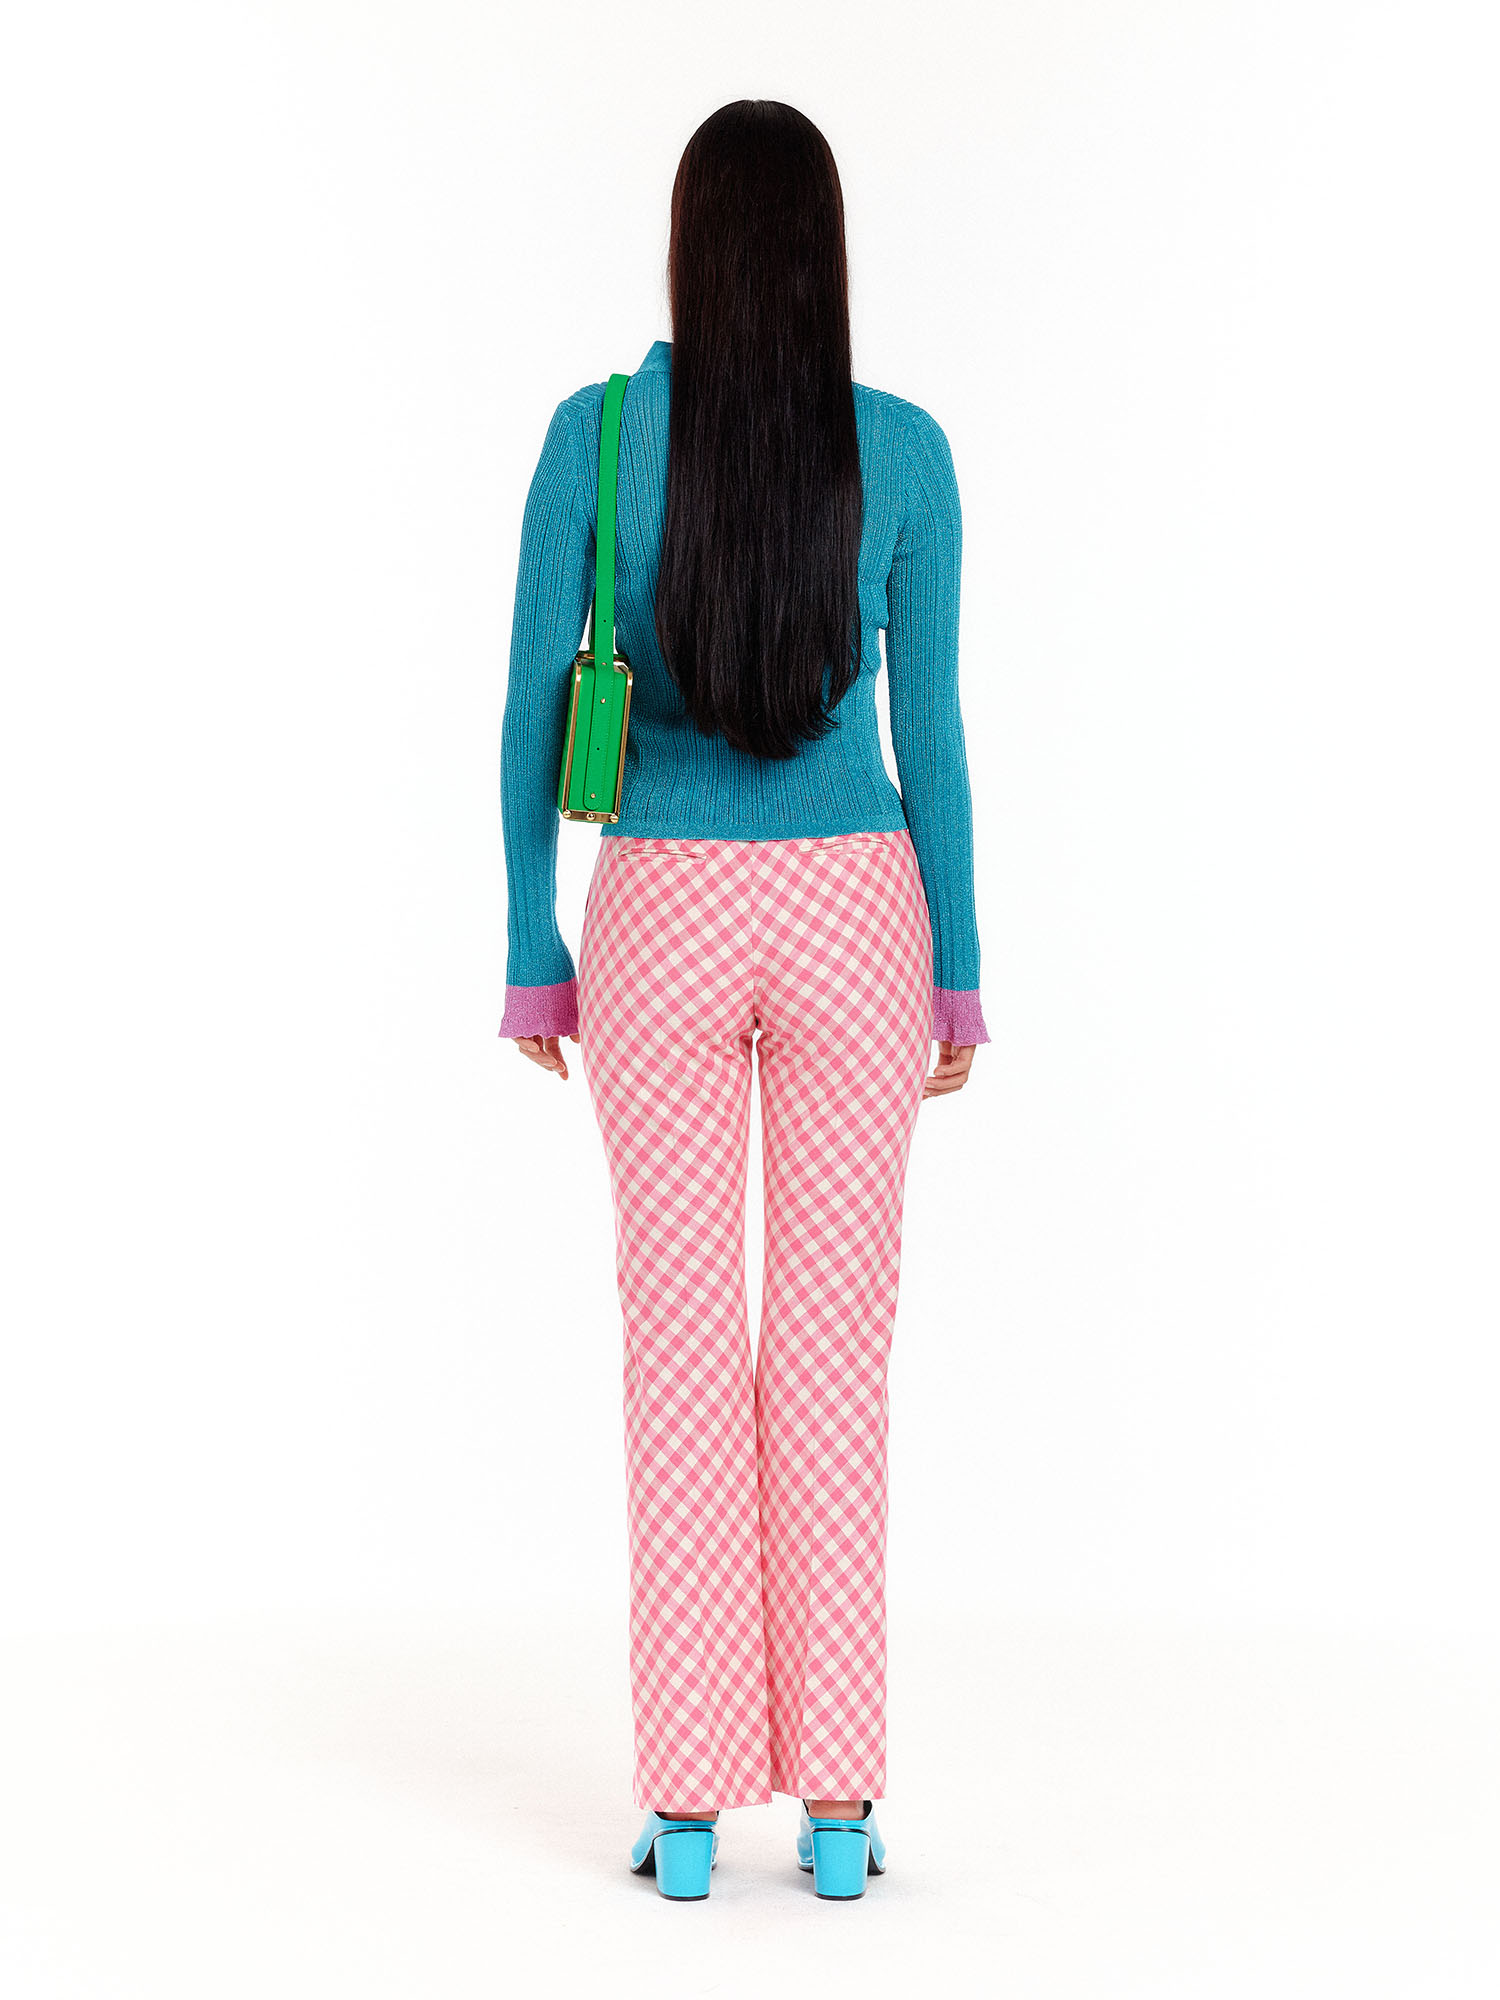 UTINKLE Pleated Knit Shirt - Green/Pink : EENK